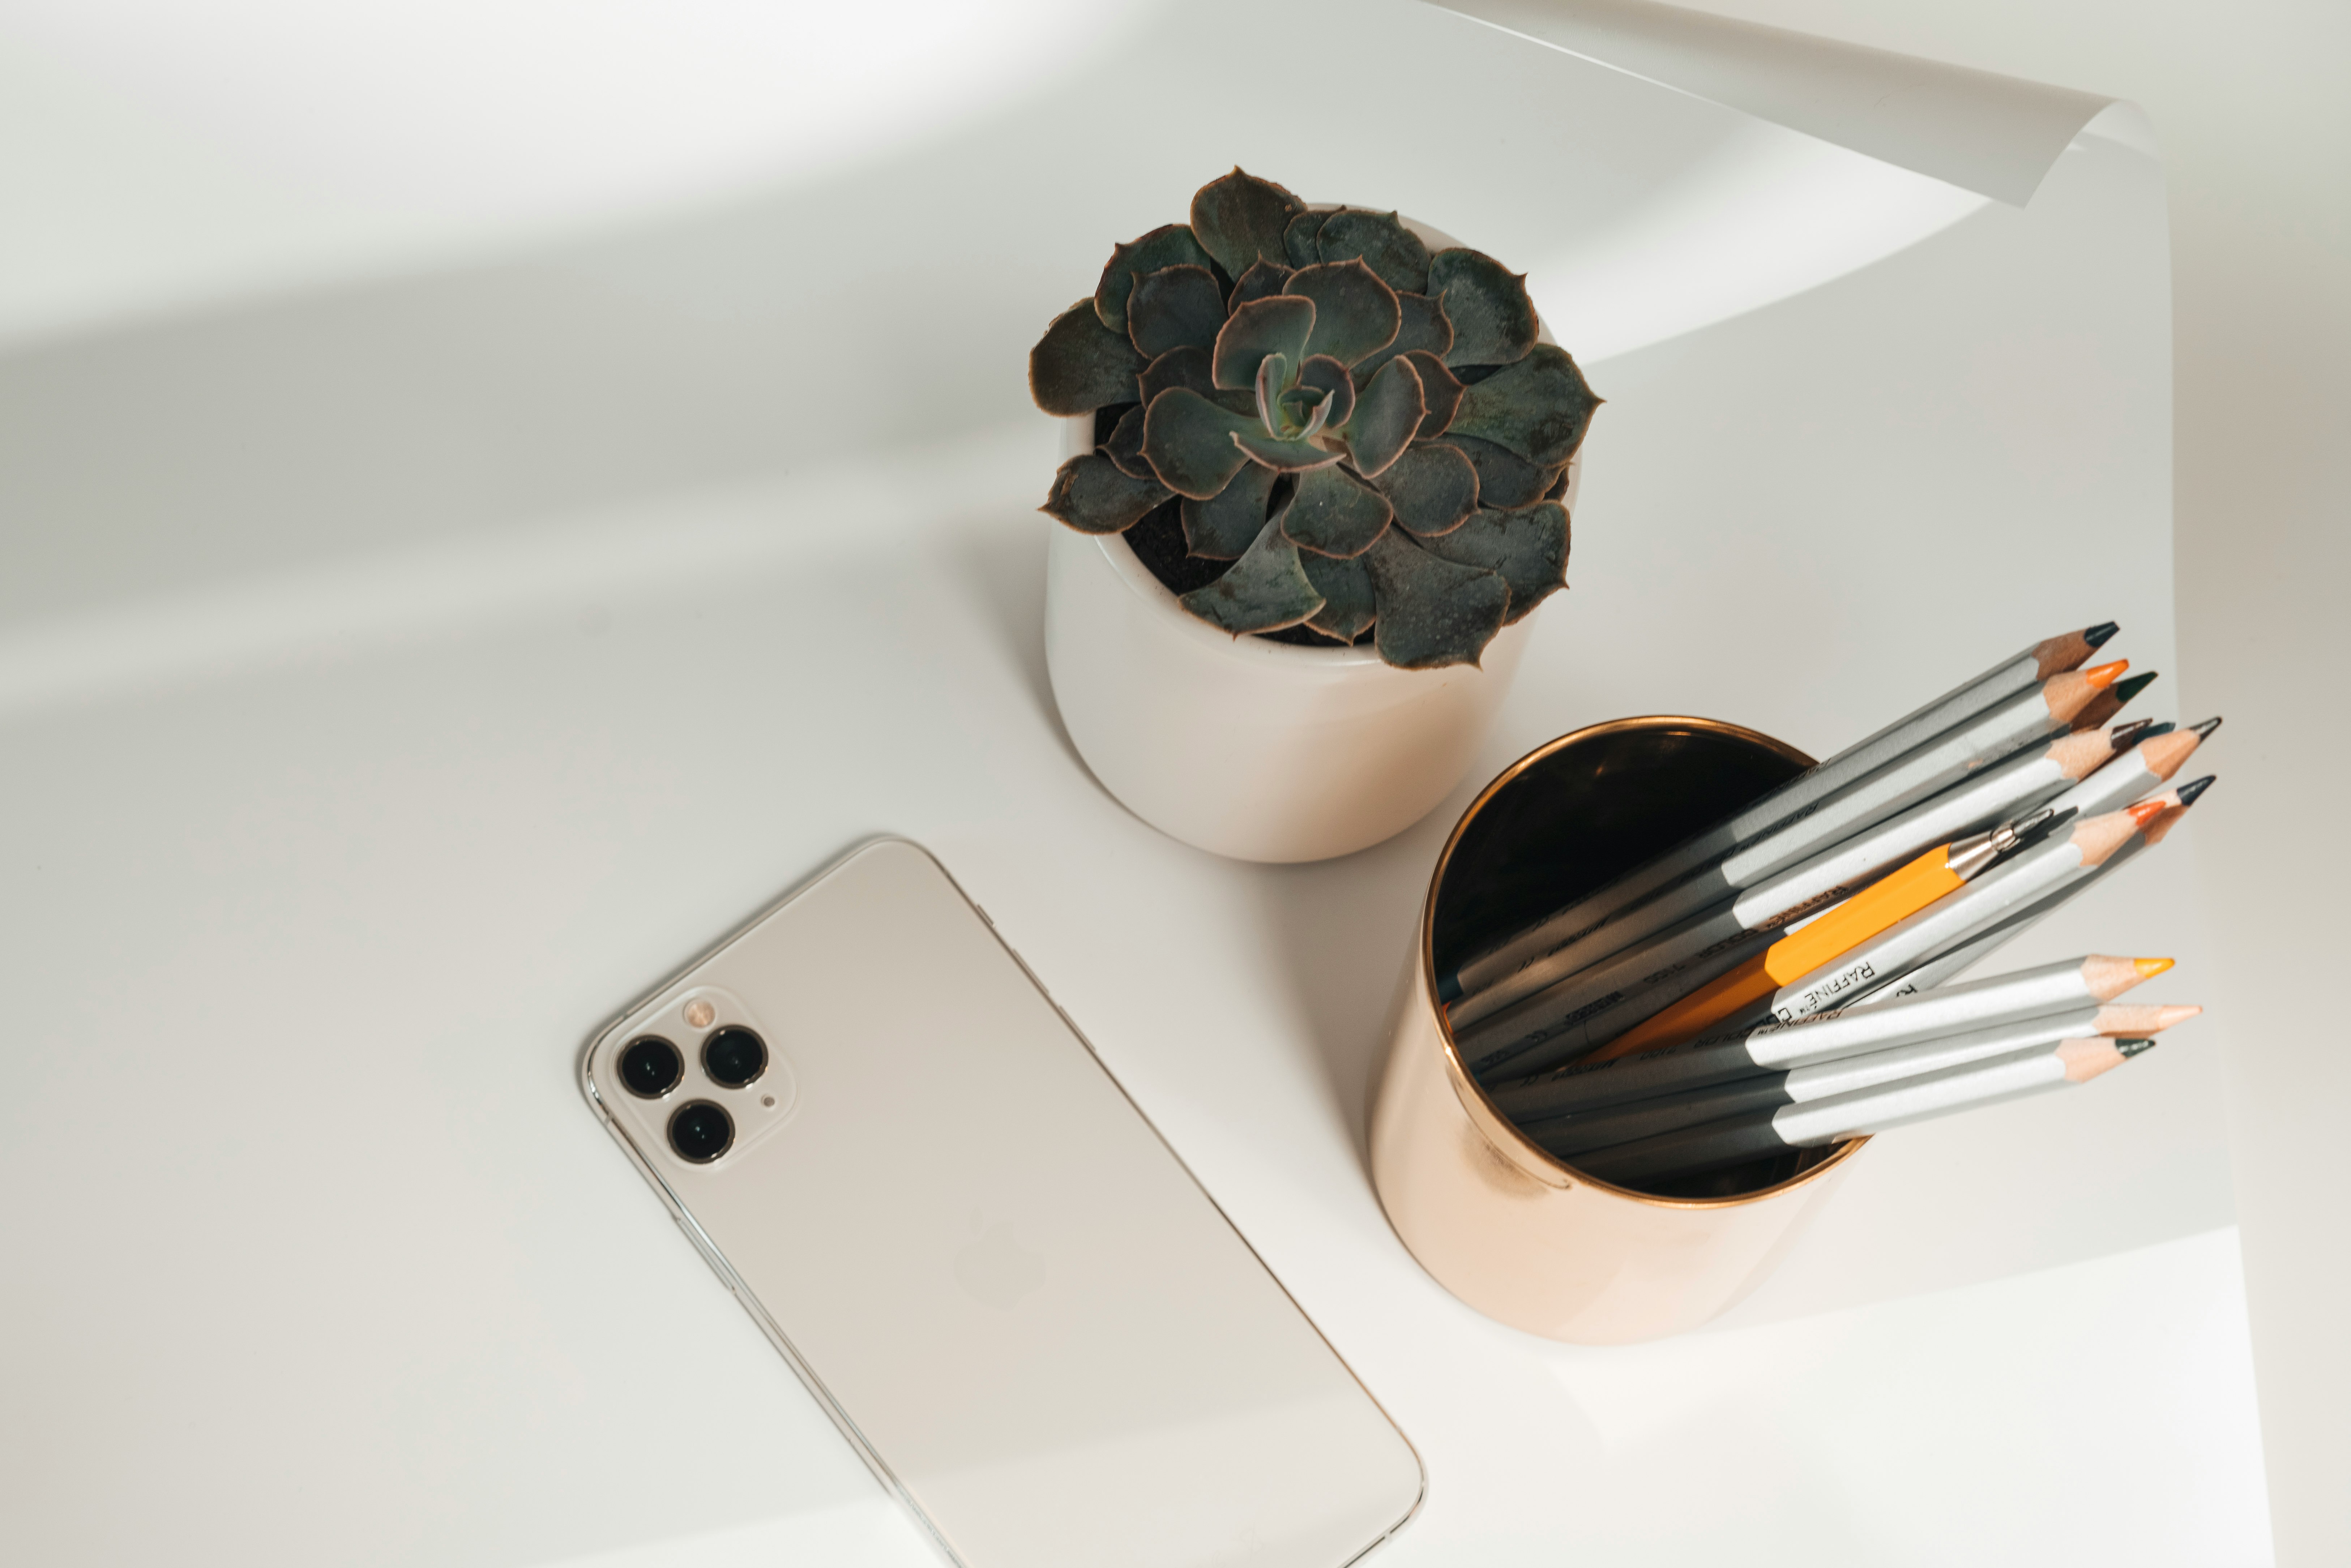 space gray iphone 6 beside white ceramic vase